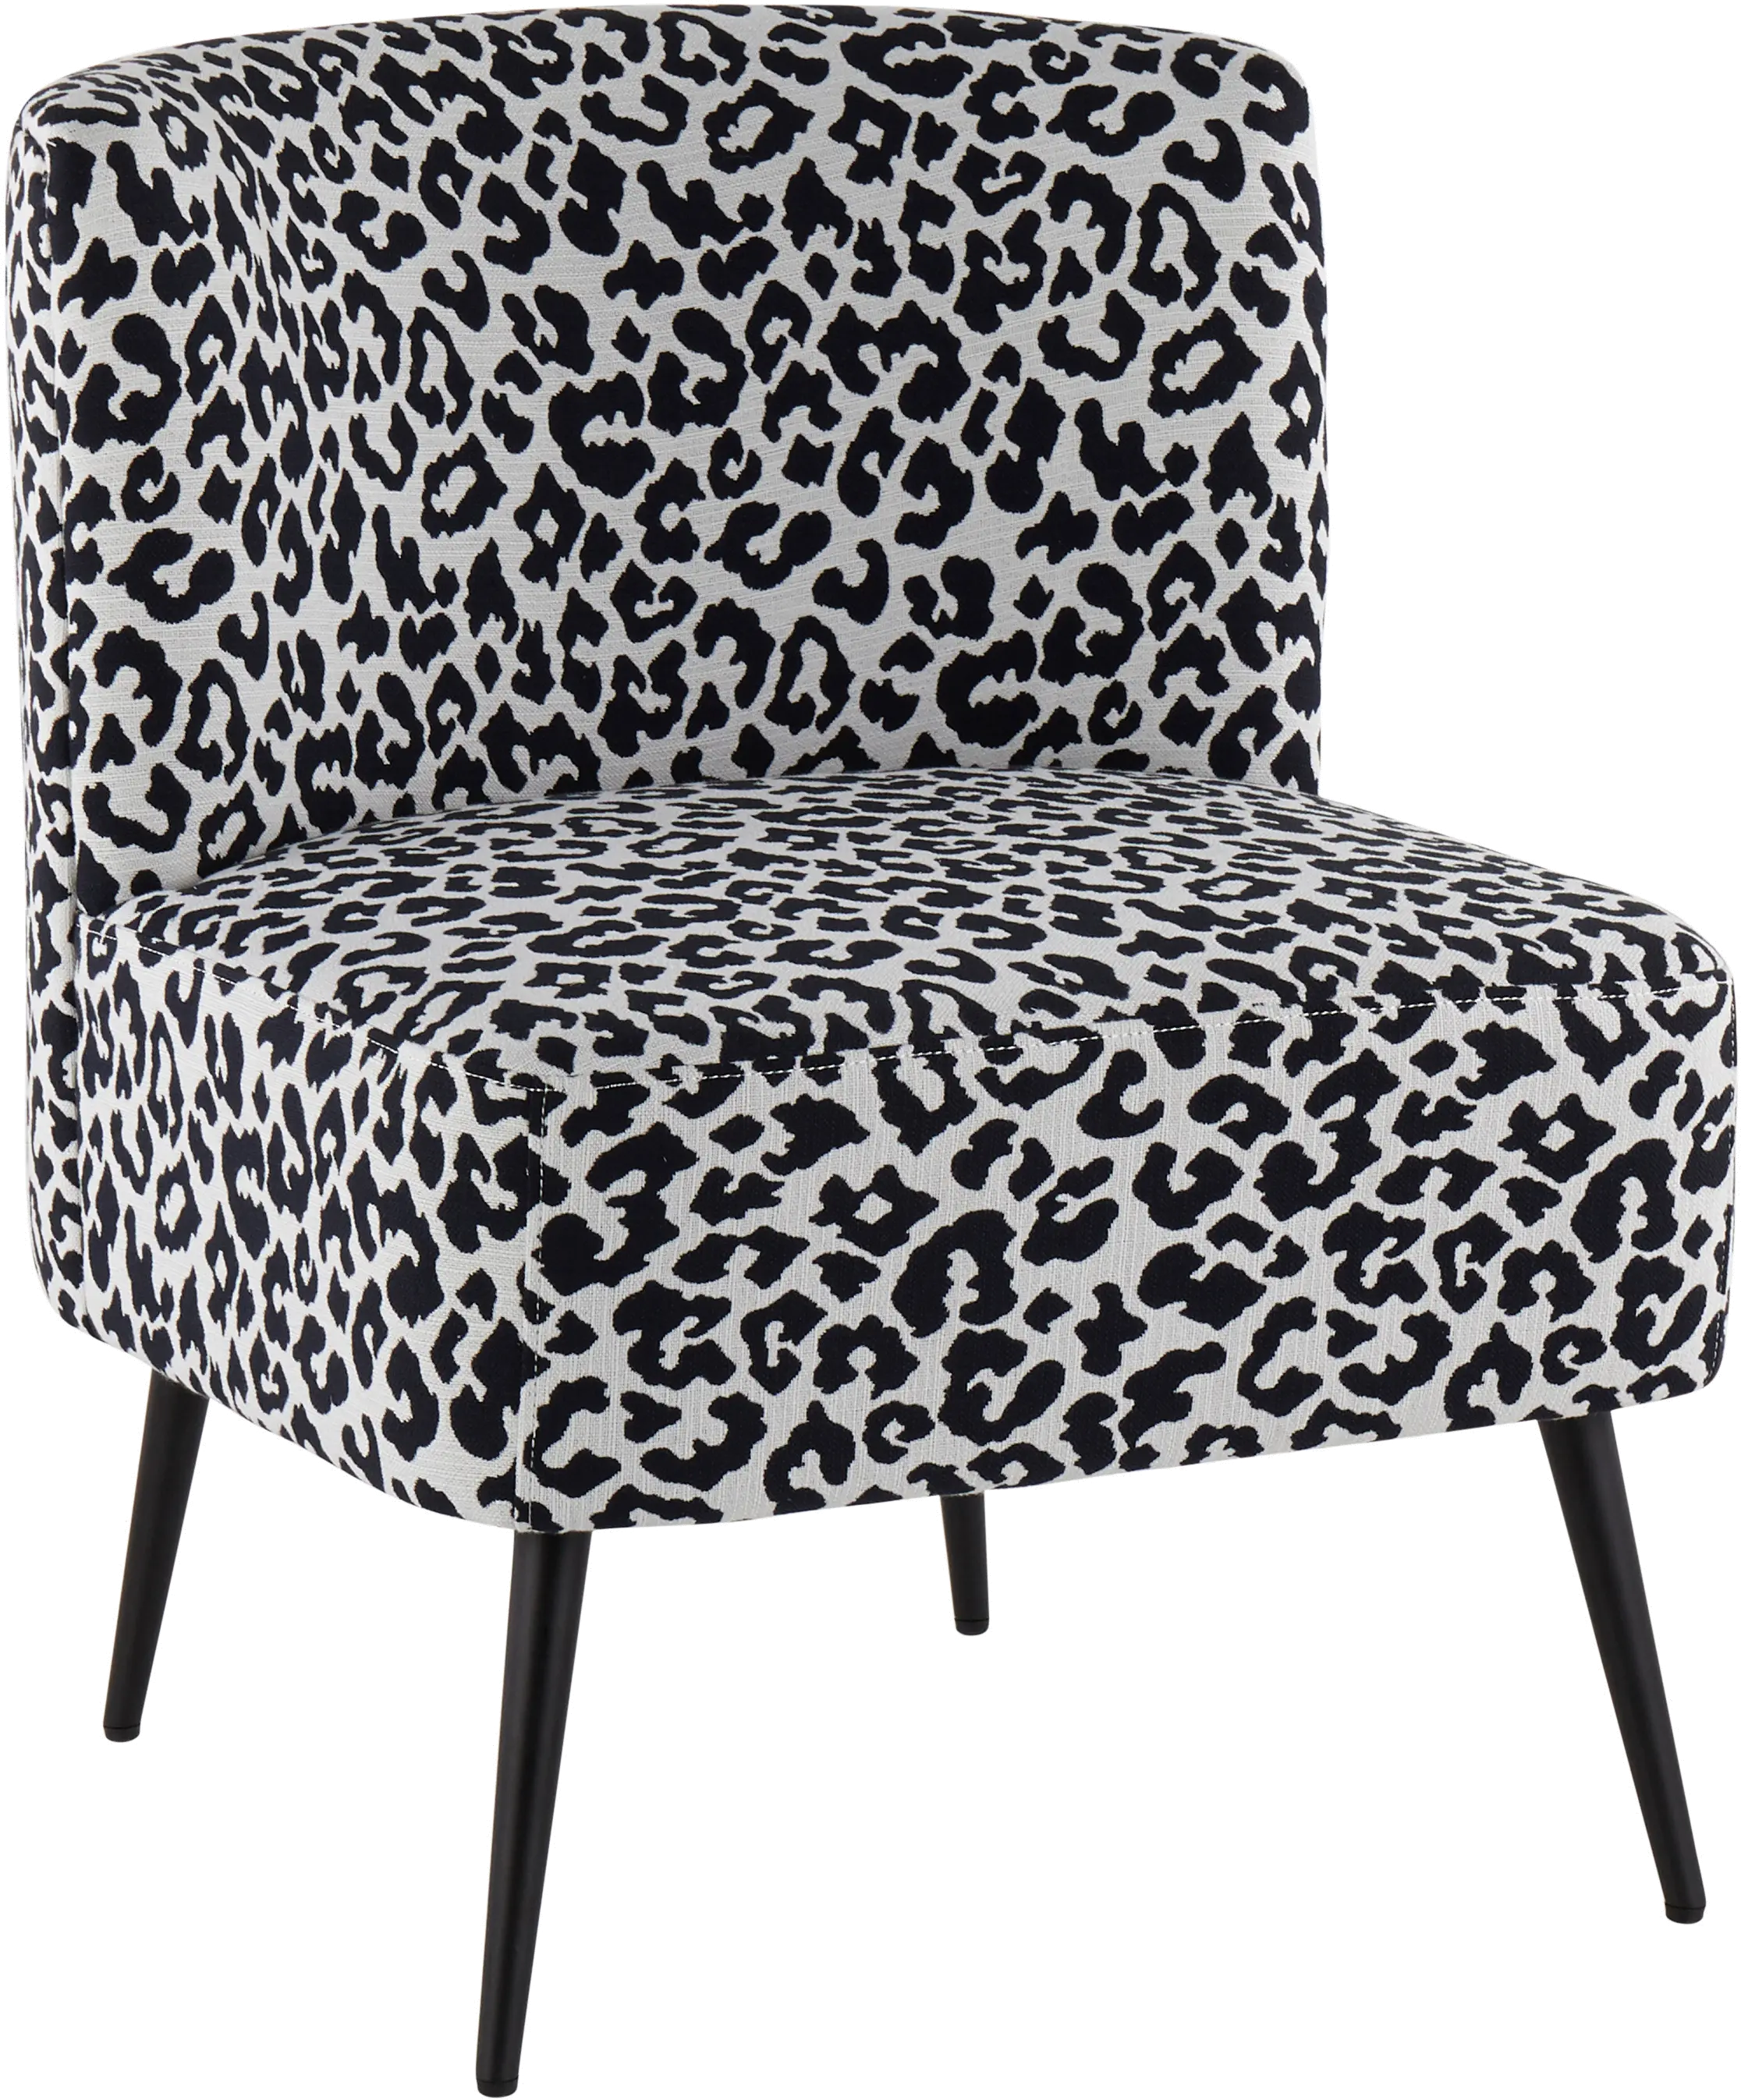 Luna Black Leopard Accent Chair